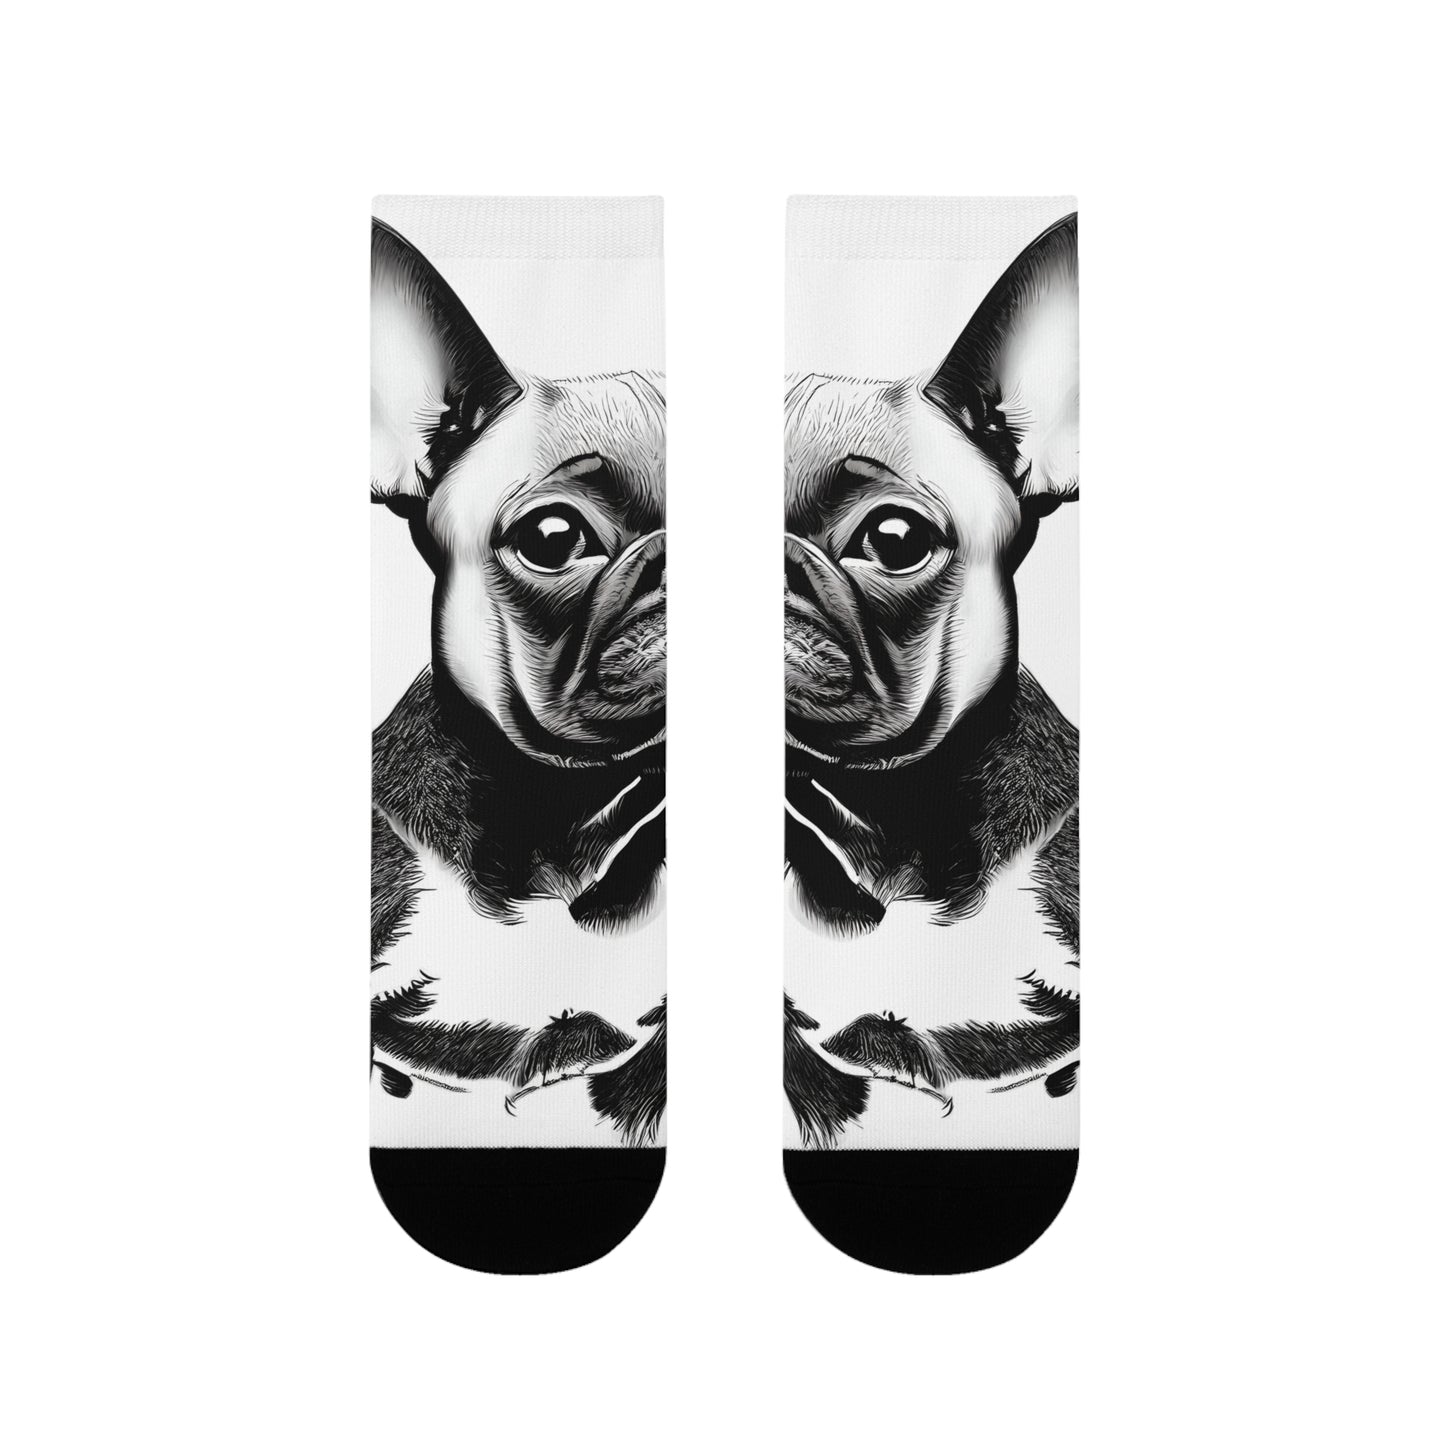 Dog Themed Socks